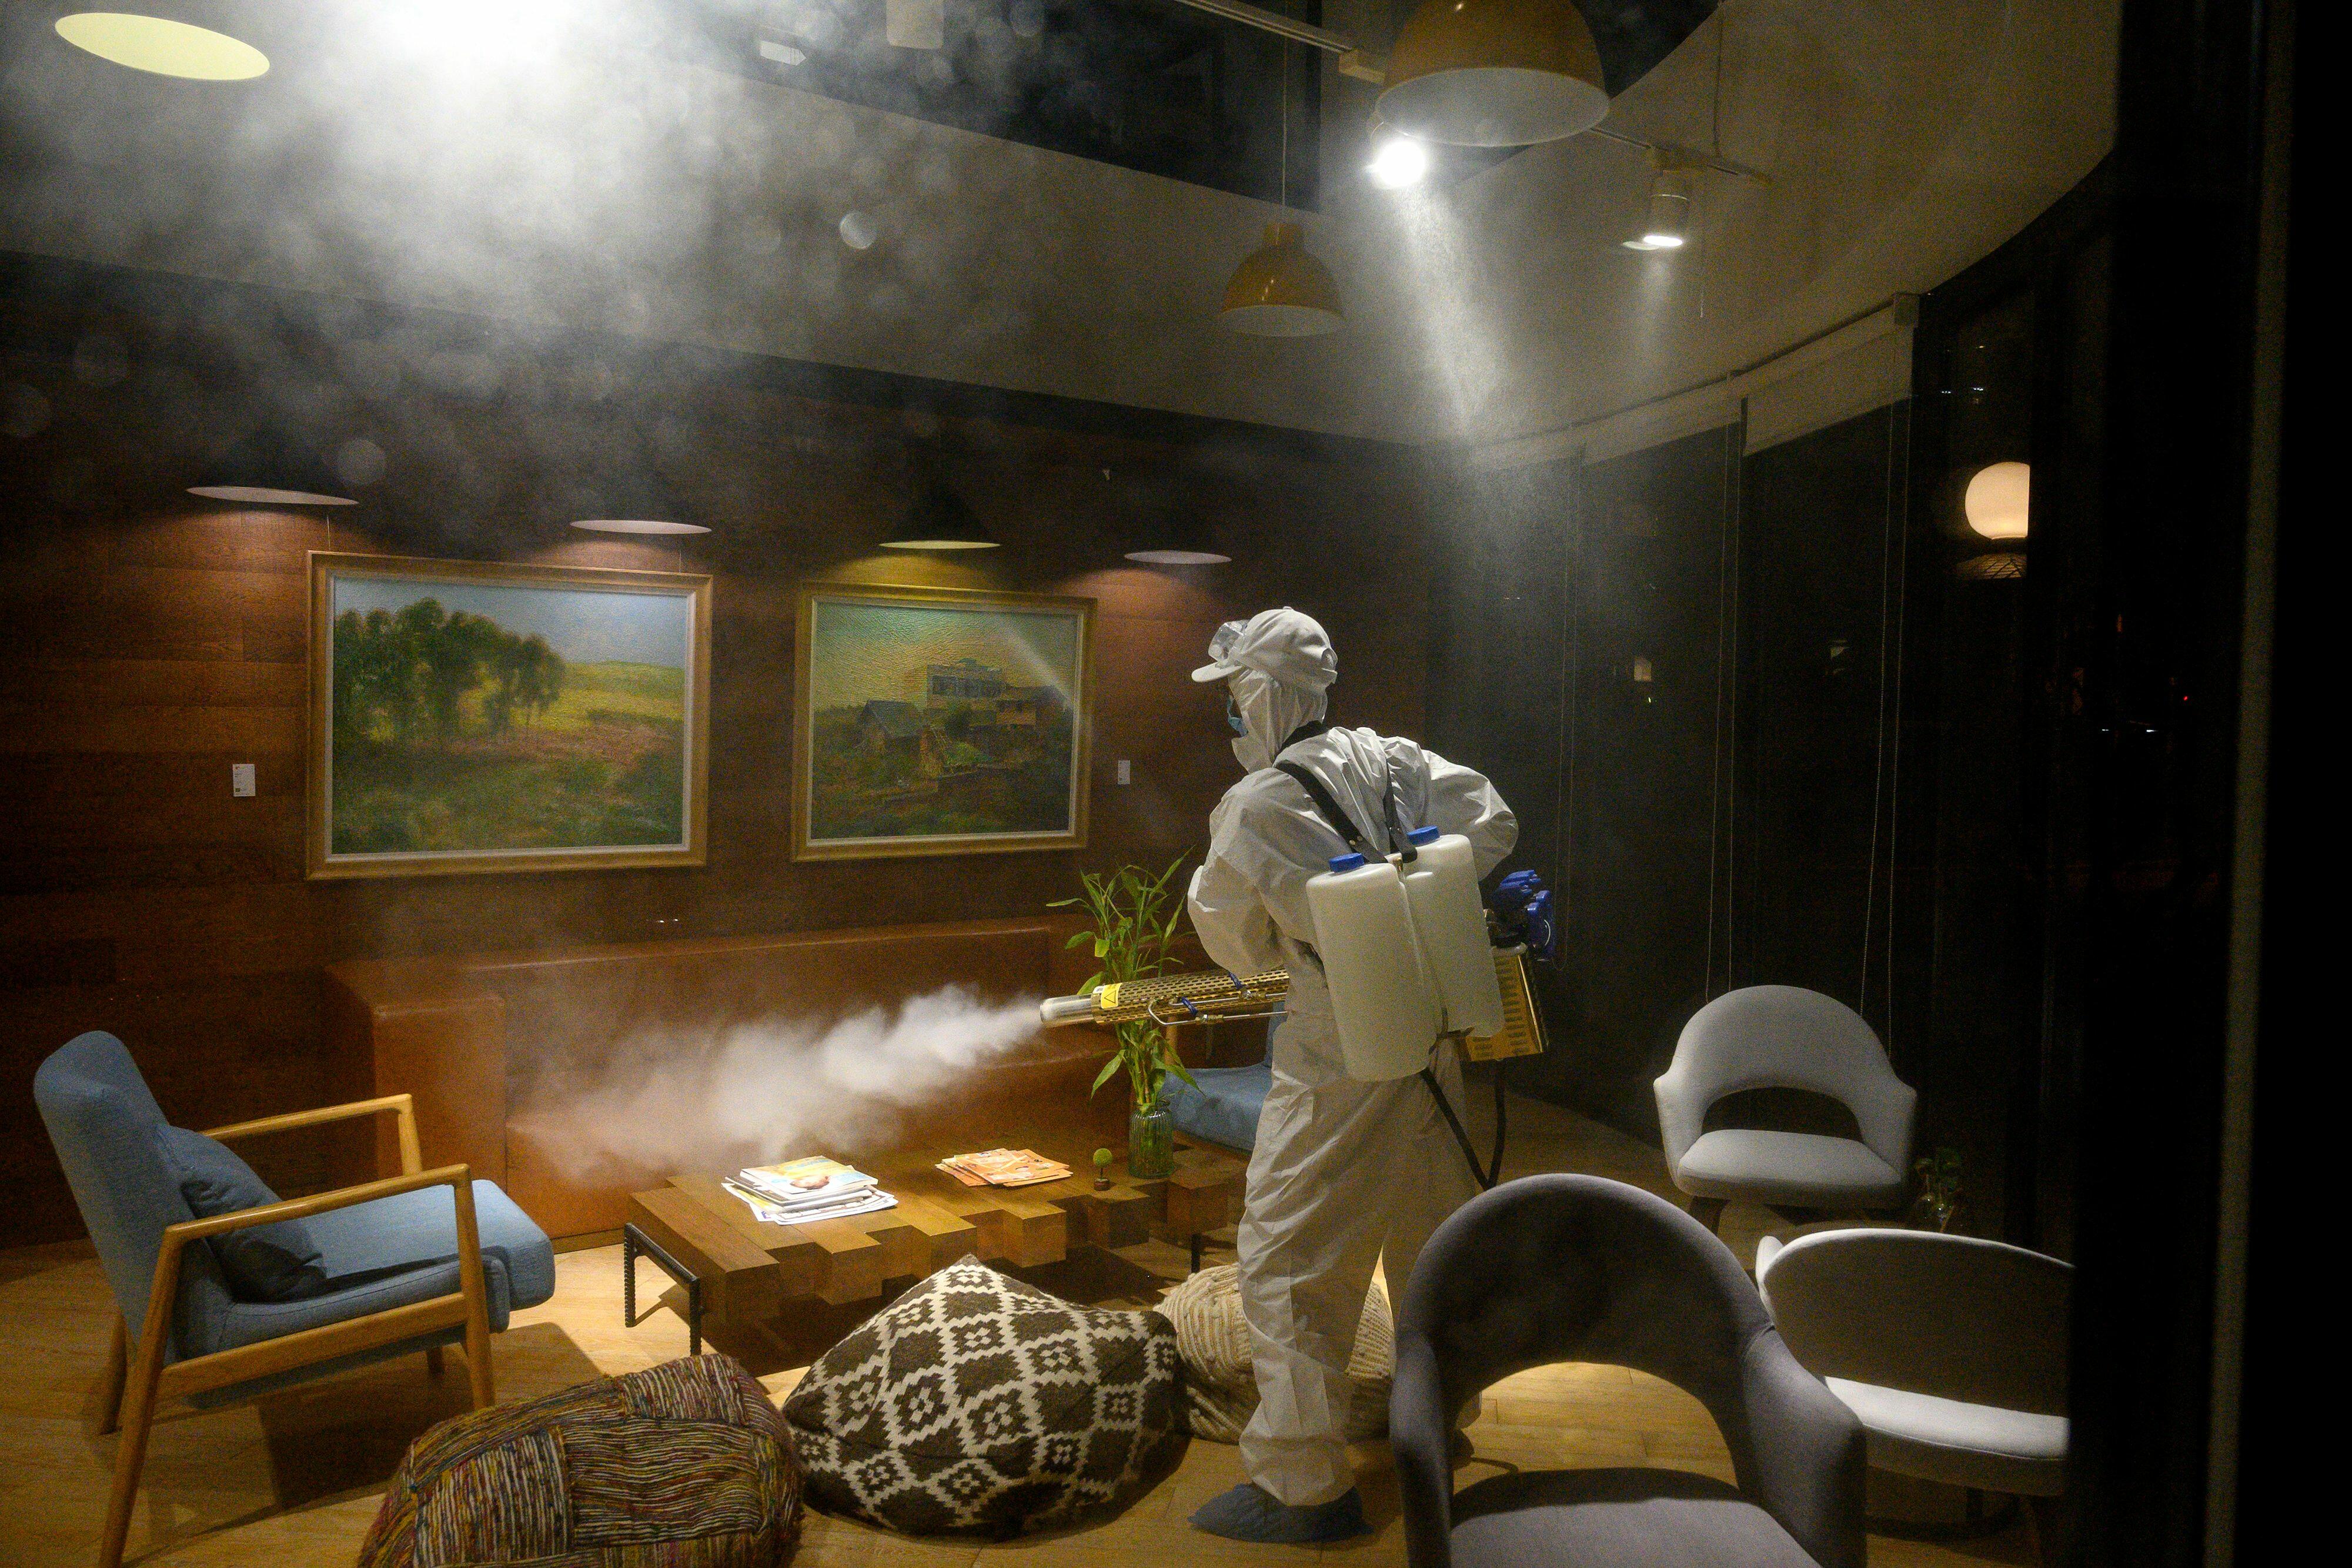 China Spraying Disinfectant Spray EVERYWHERE To Fight Coronavirus [Video] - Thumbnail Image